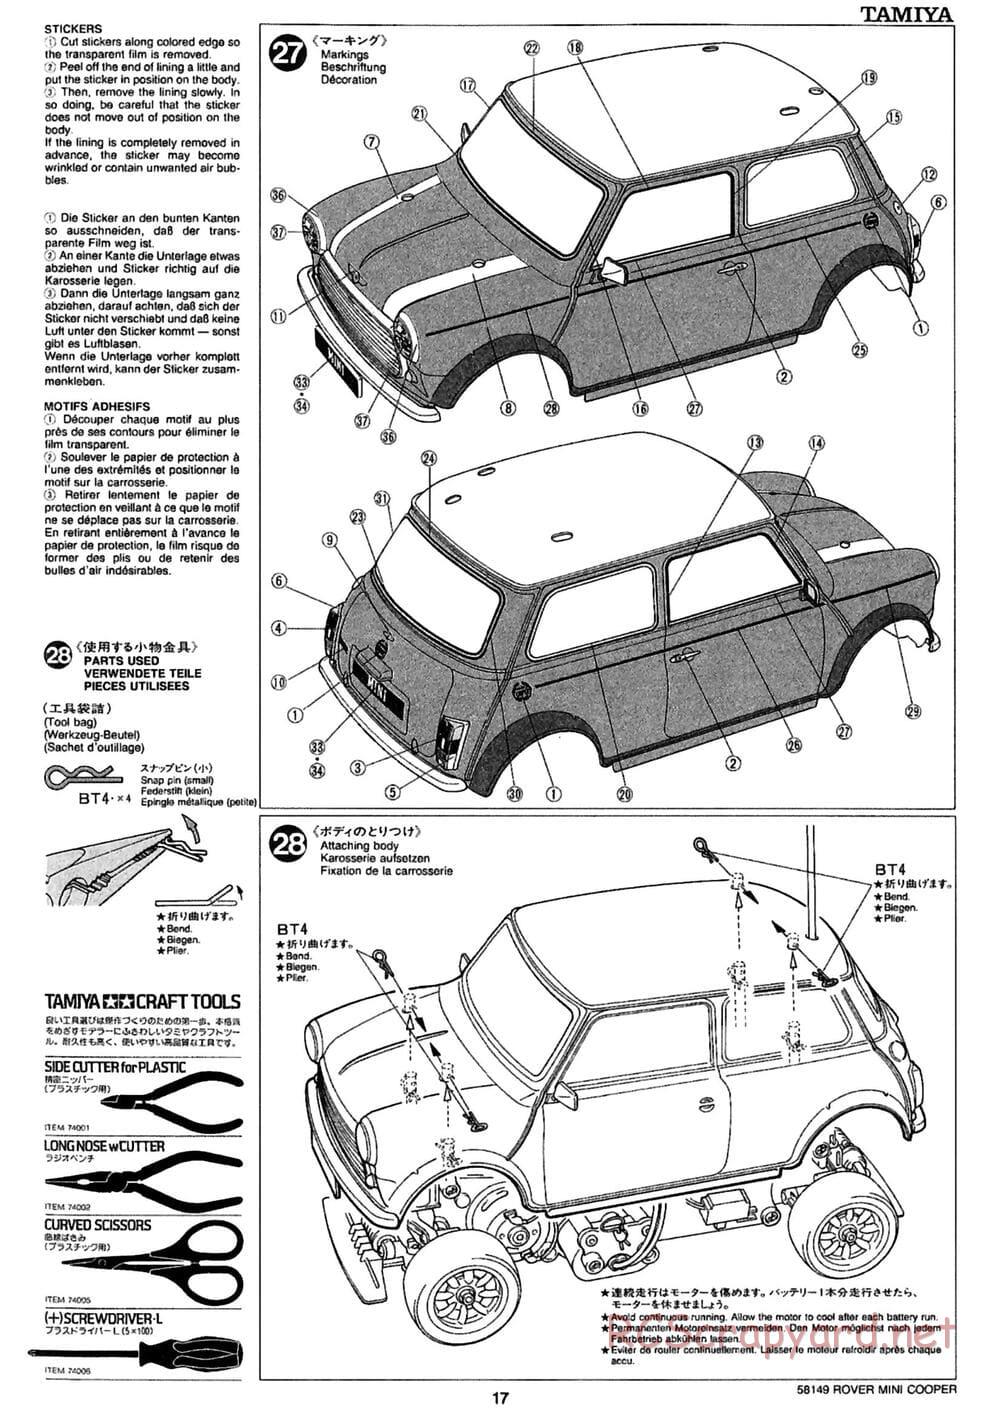 Tamiya - Rover Mini Cooper - M01 Chassis - Manual - Page 17